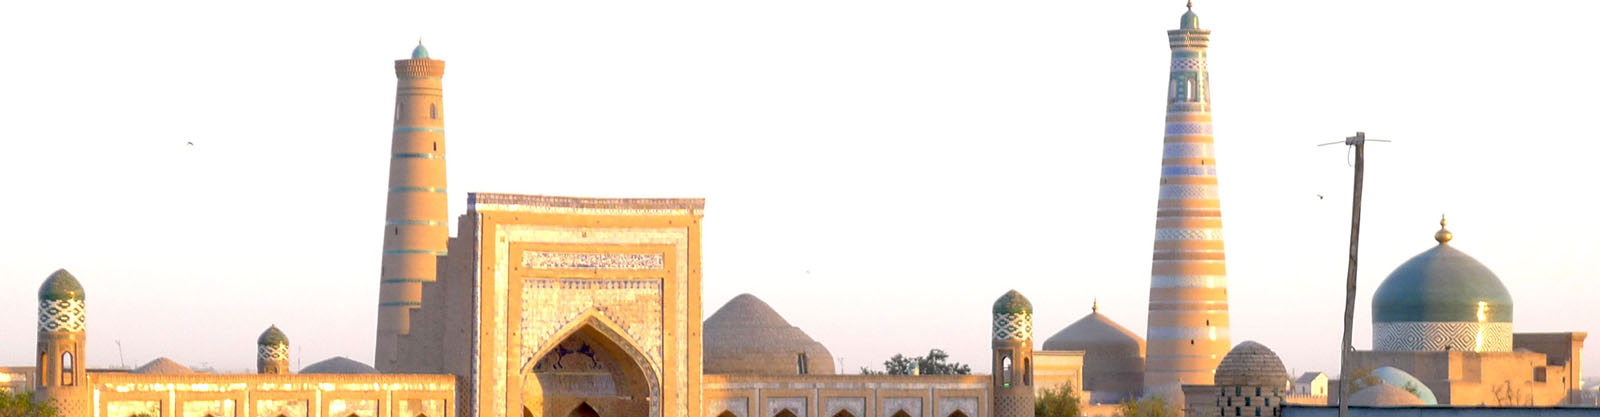 turkmenistan-uzbekistan-tajikistan-group-tour-banner